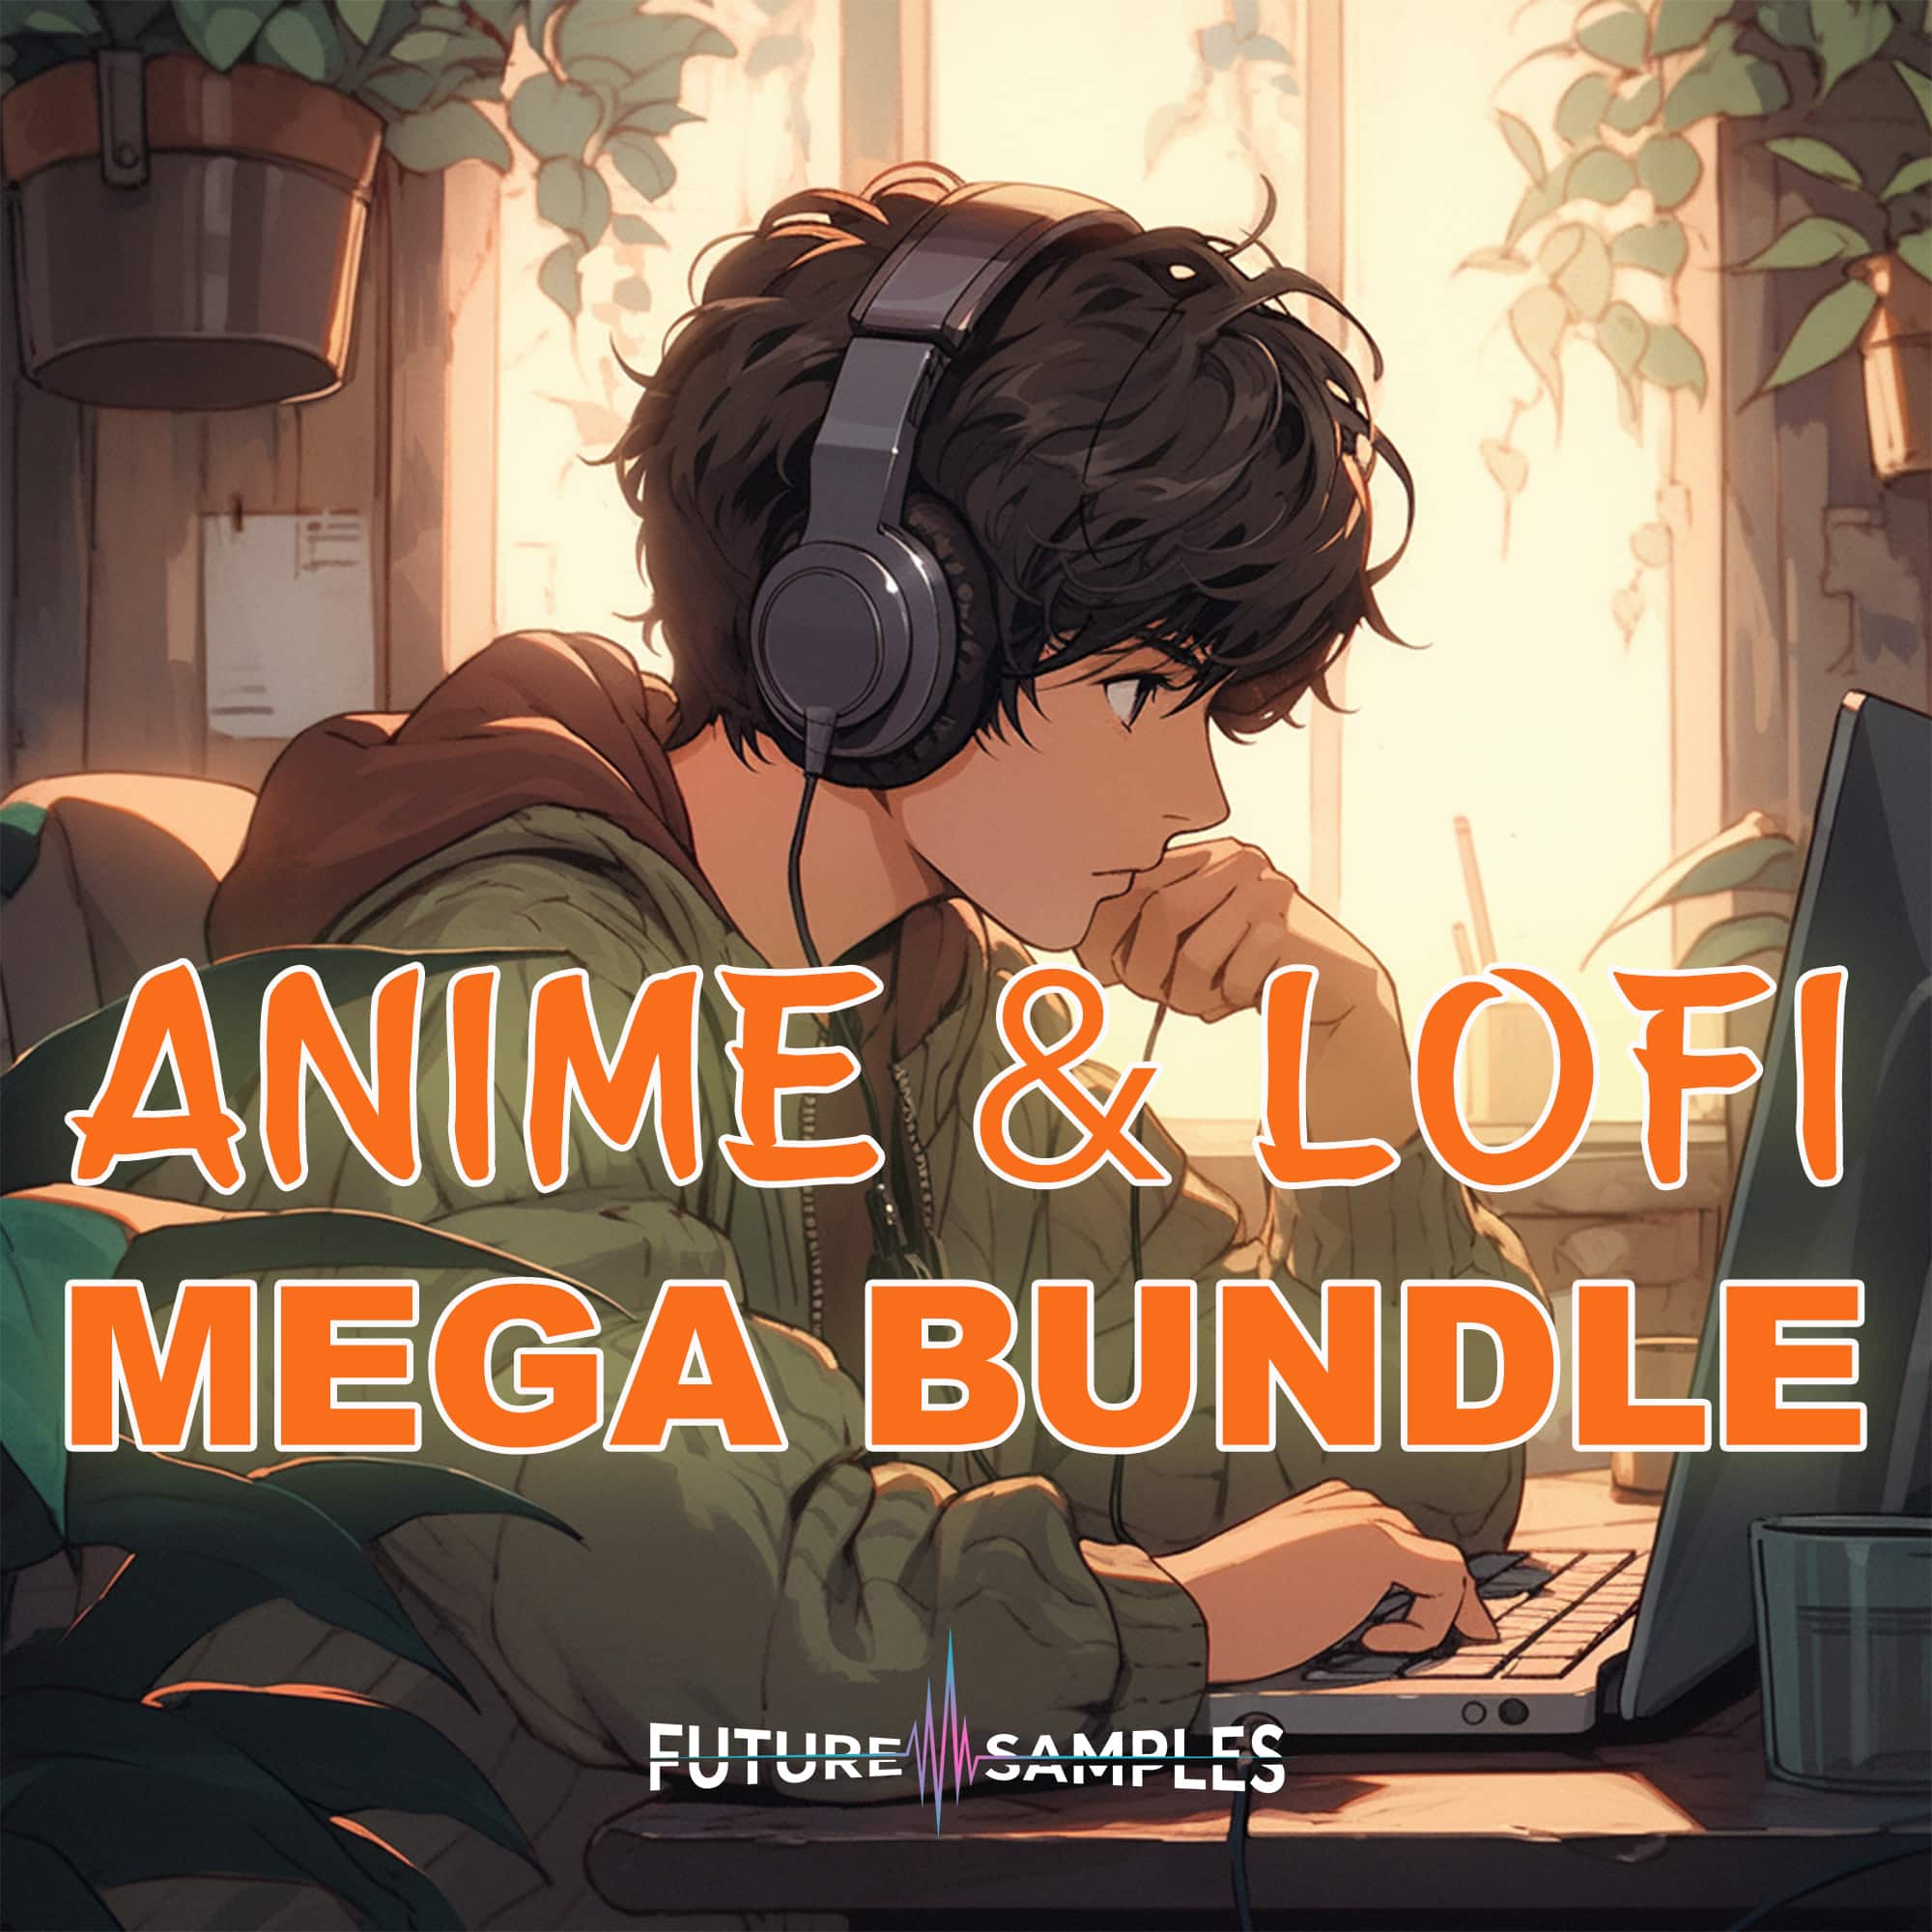 95% off “Anime & Lofi Mega Bundle” by Future Samples